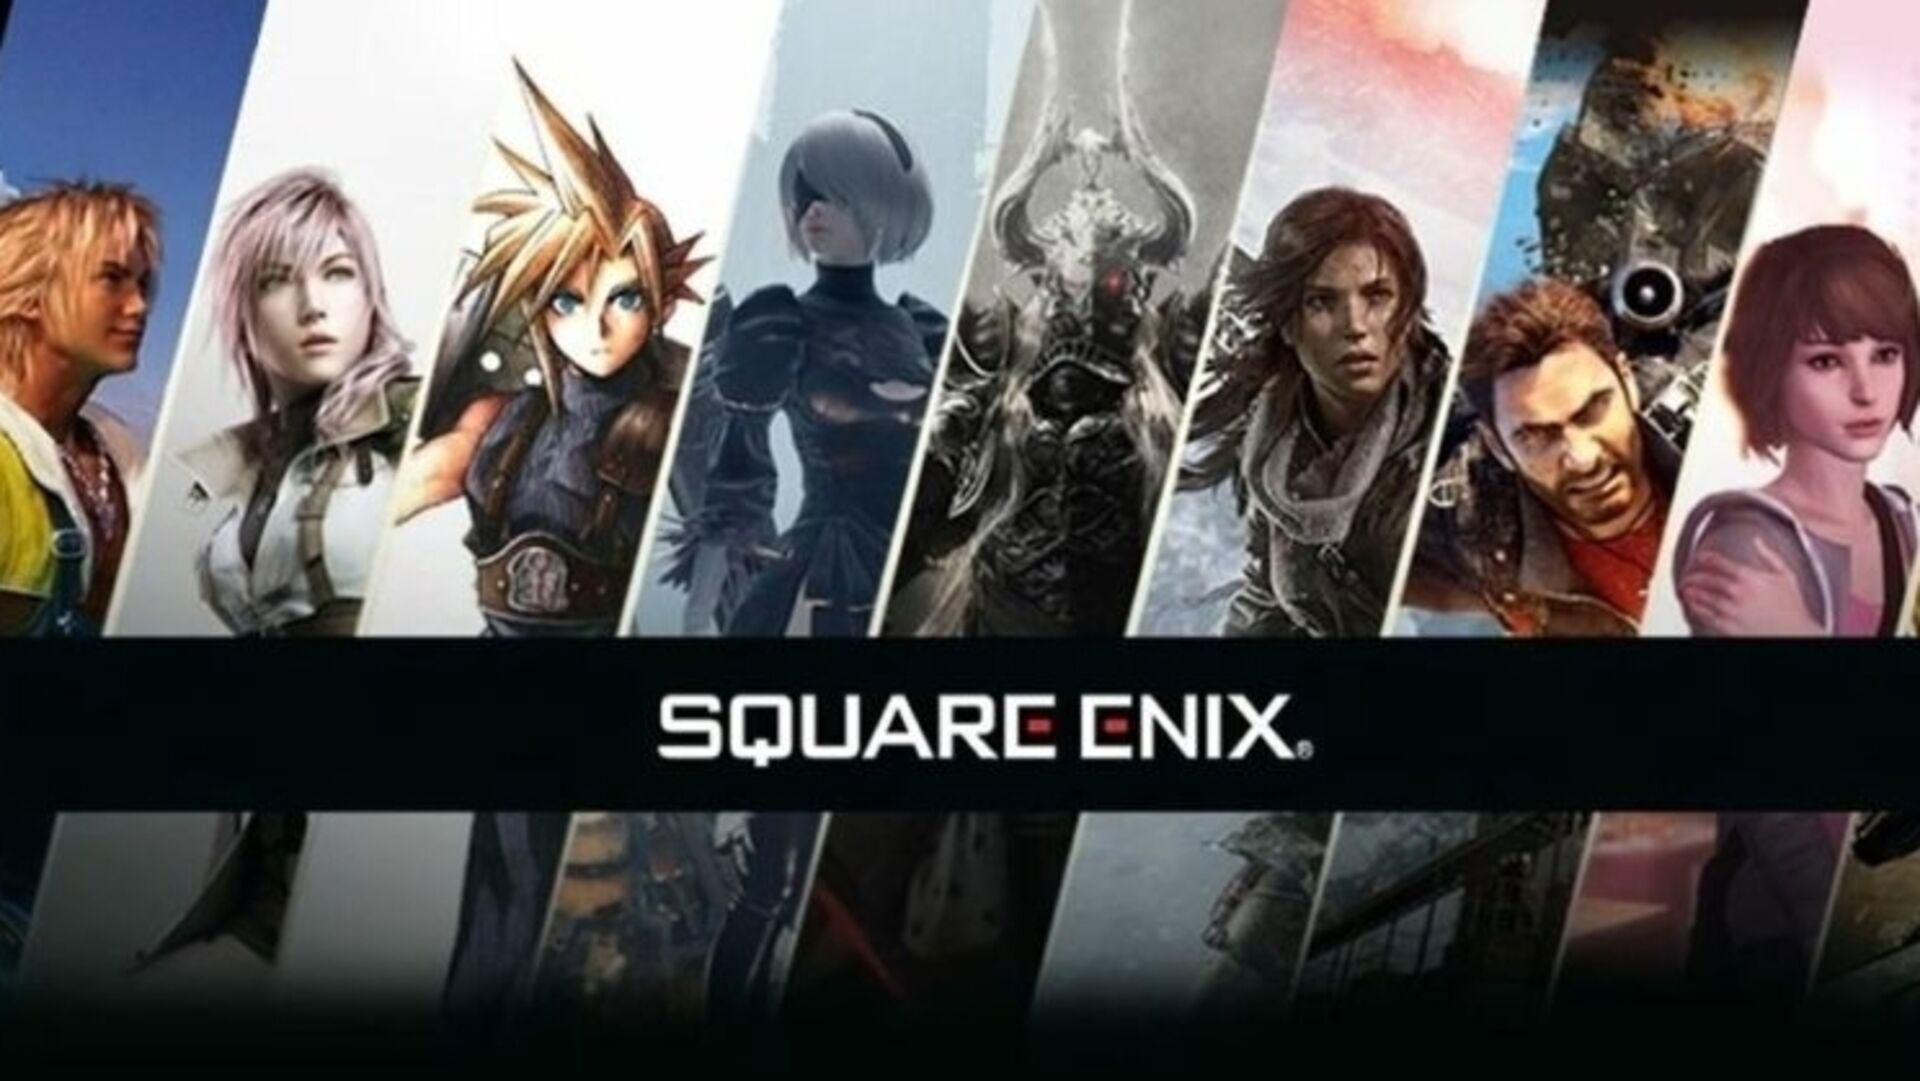 Square Enix, חברת בידור יפנית, קופצת לתוך שיגעון משחקי הבלוקצ'יין.